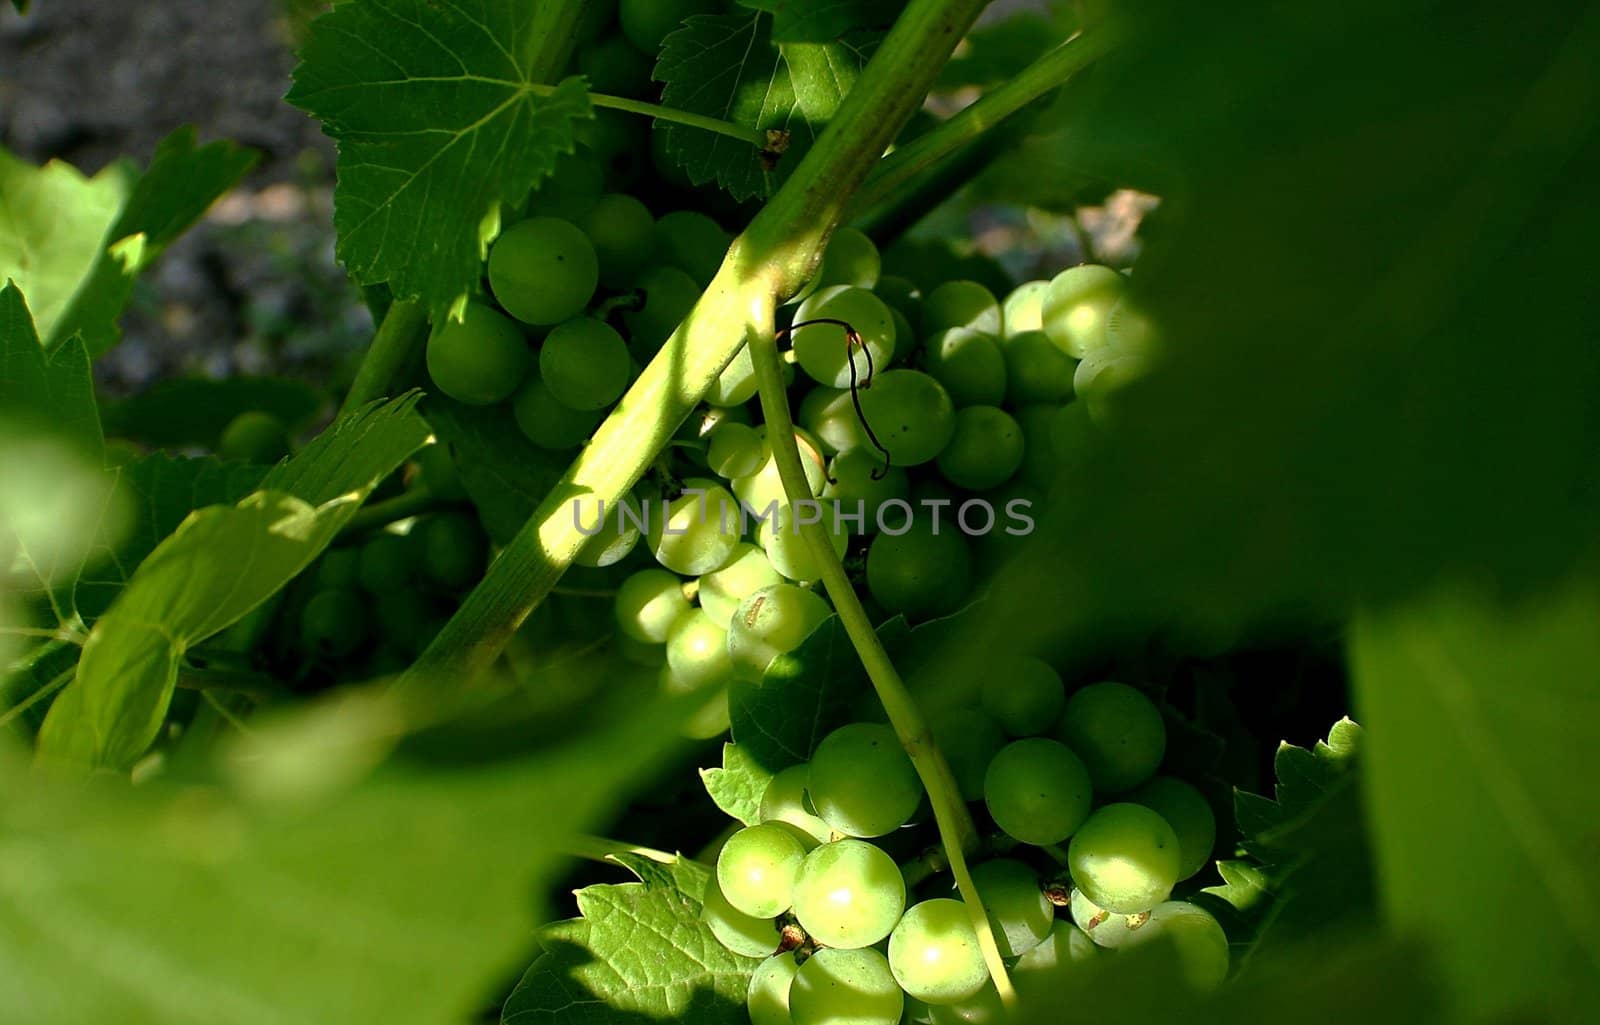 Sunny wine grapes by dbriyul